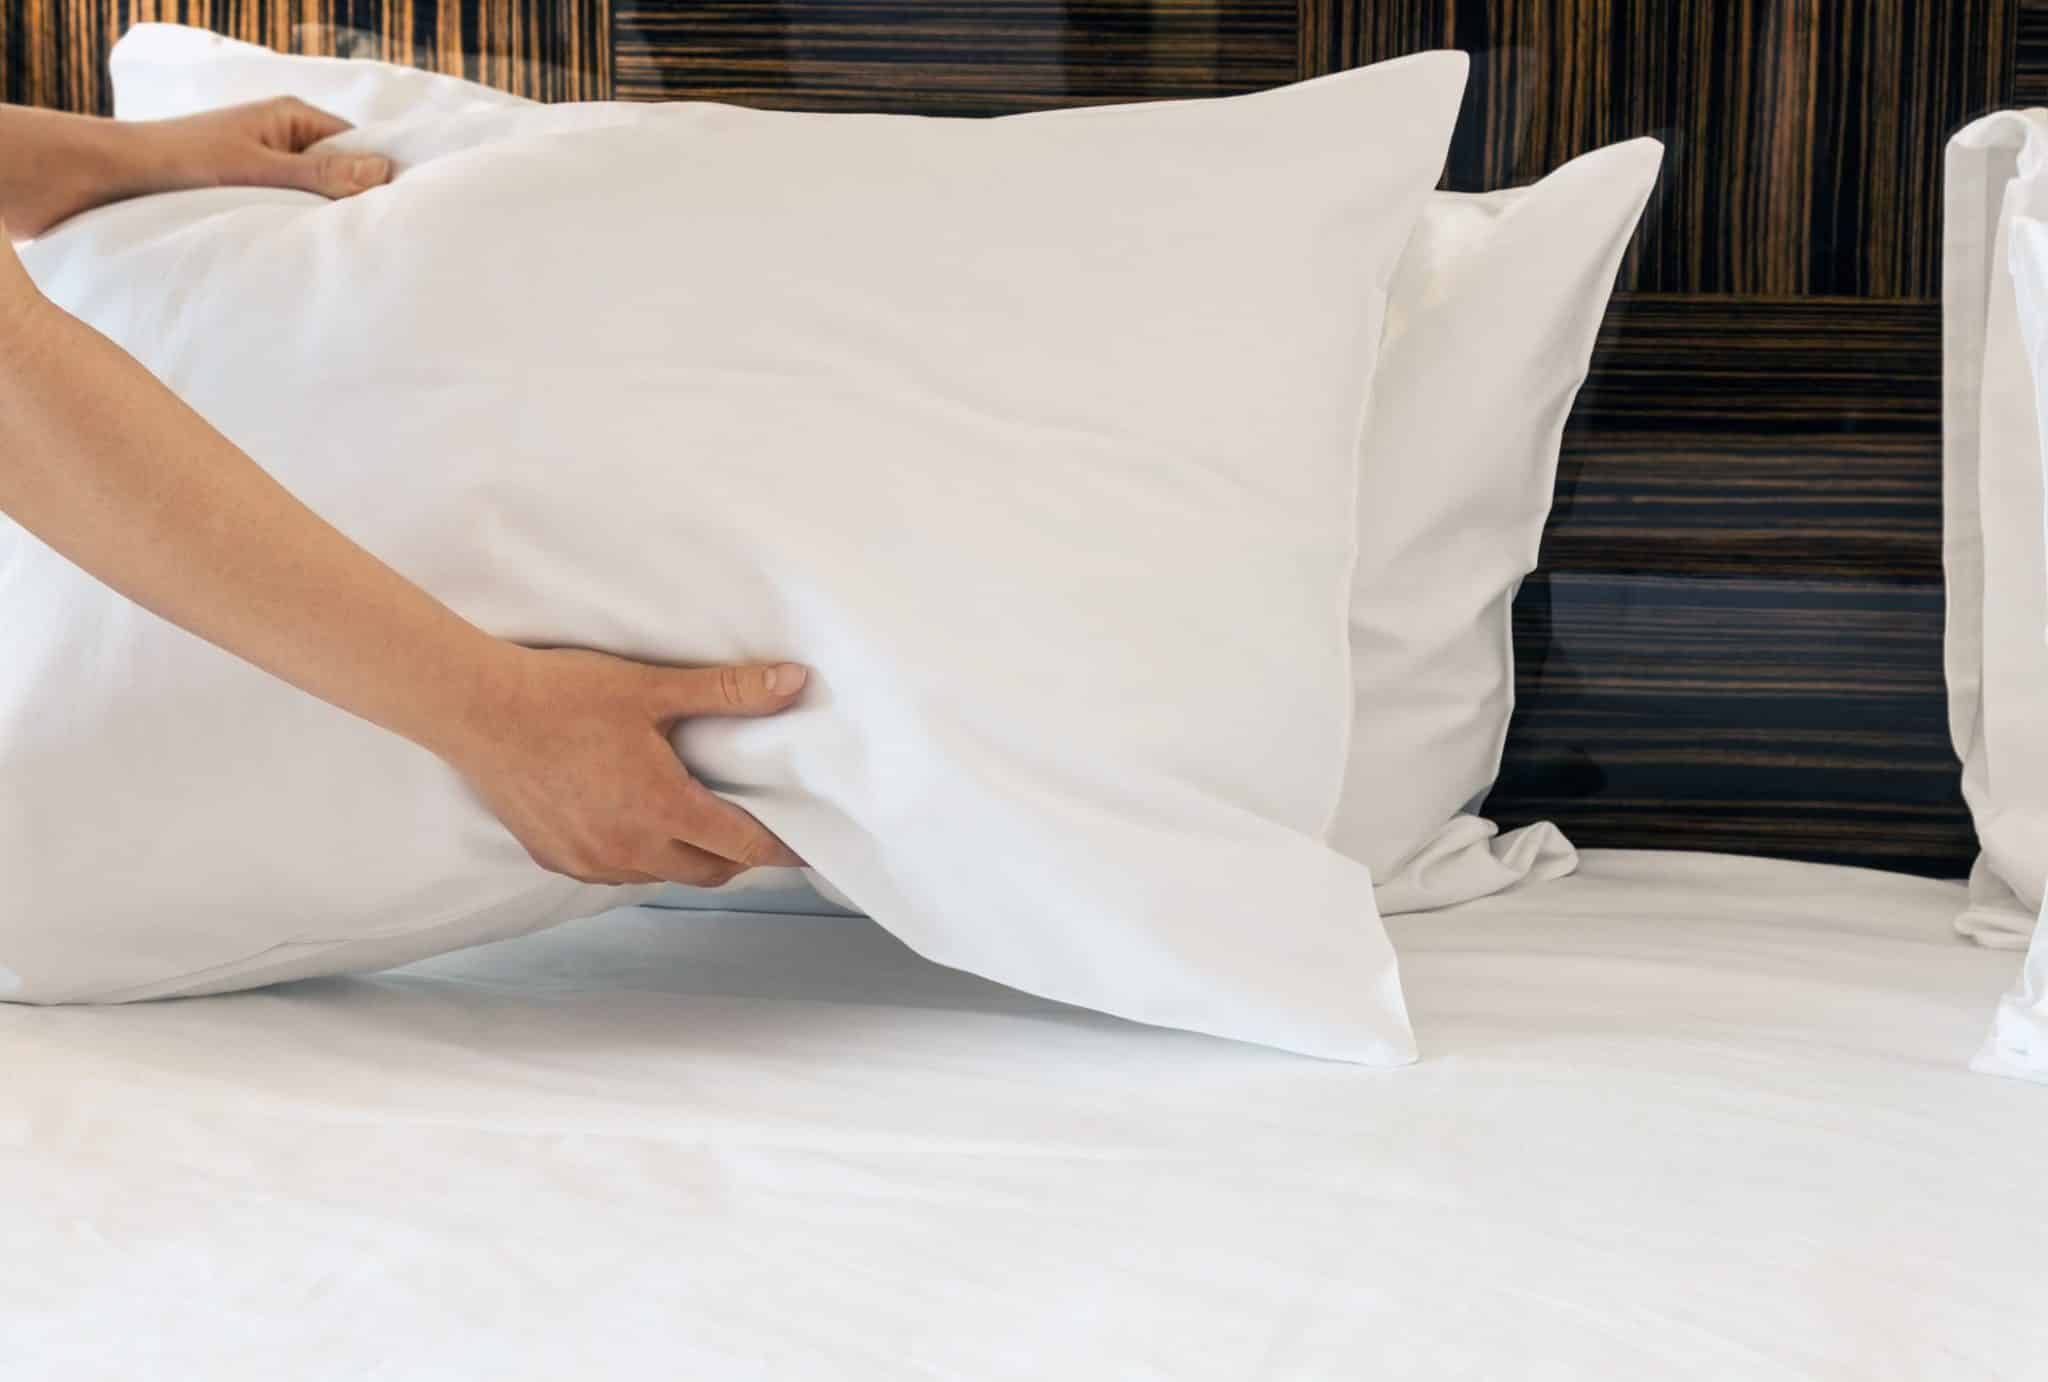 Can You Re-Fluff a Flat Pillow?